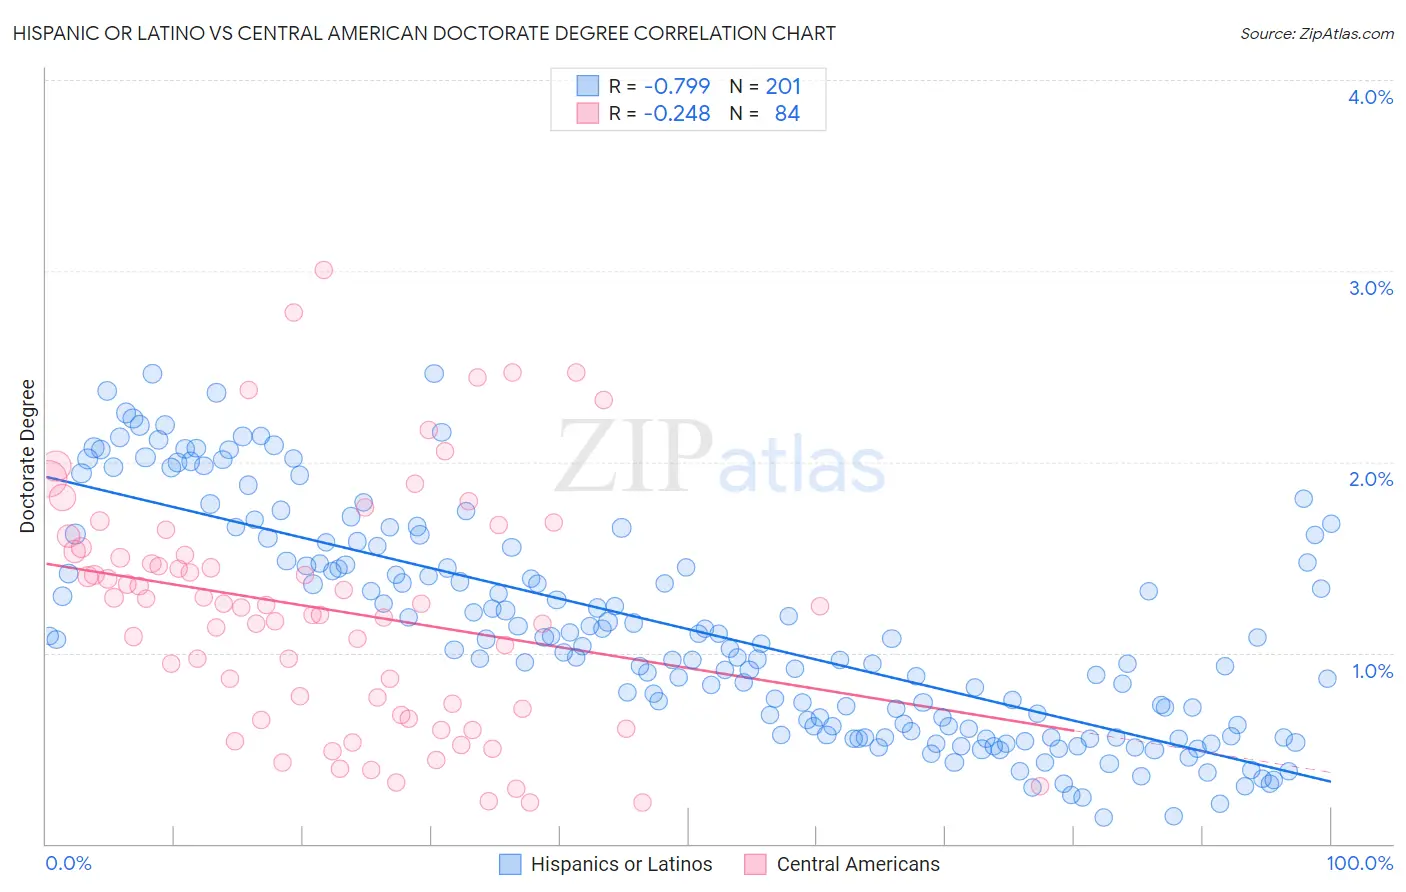 Hispanic or Latino vs Central American Doctorate Degree